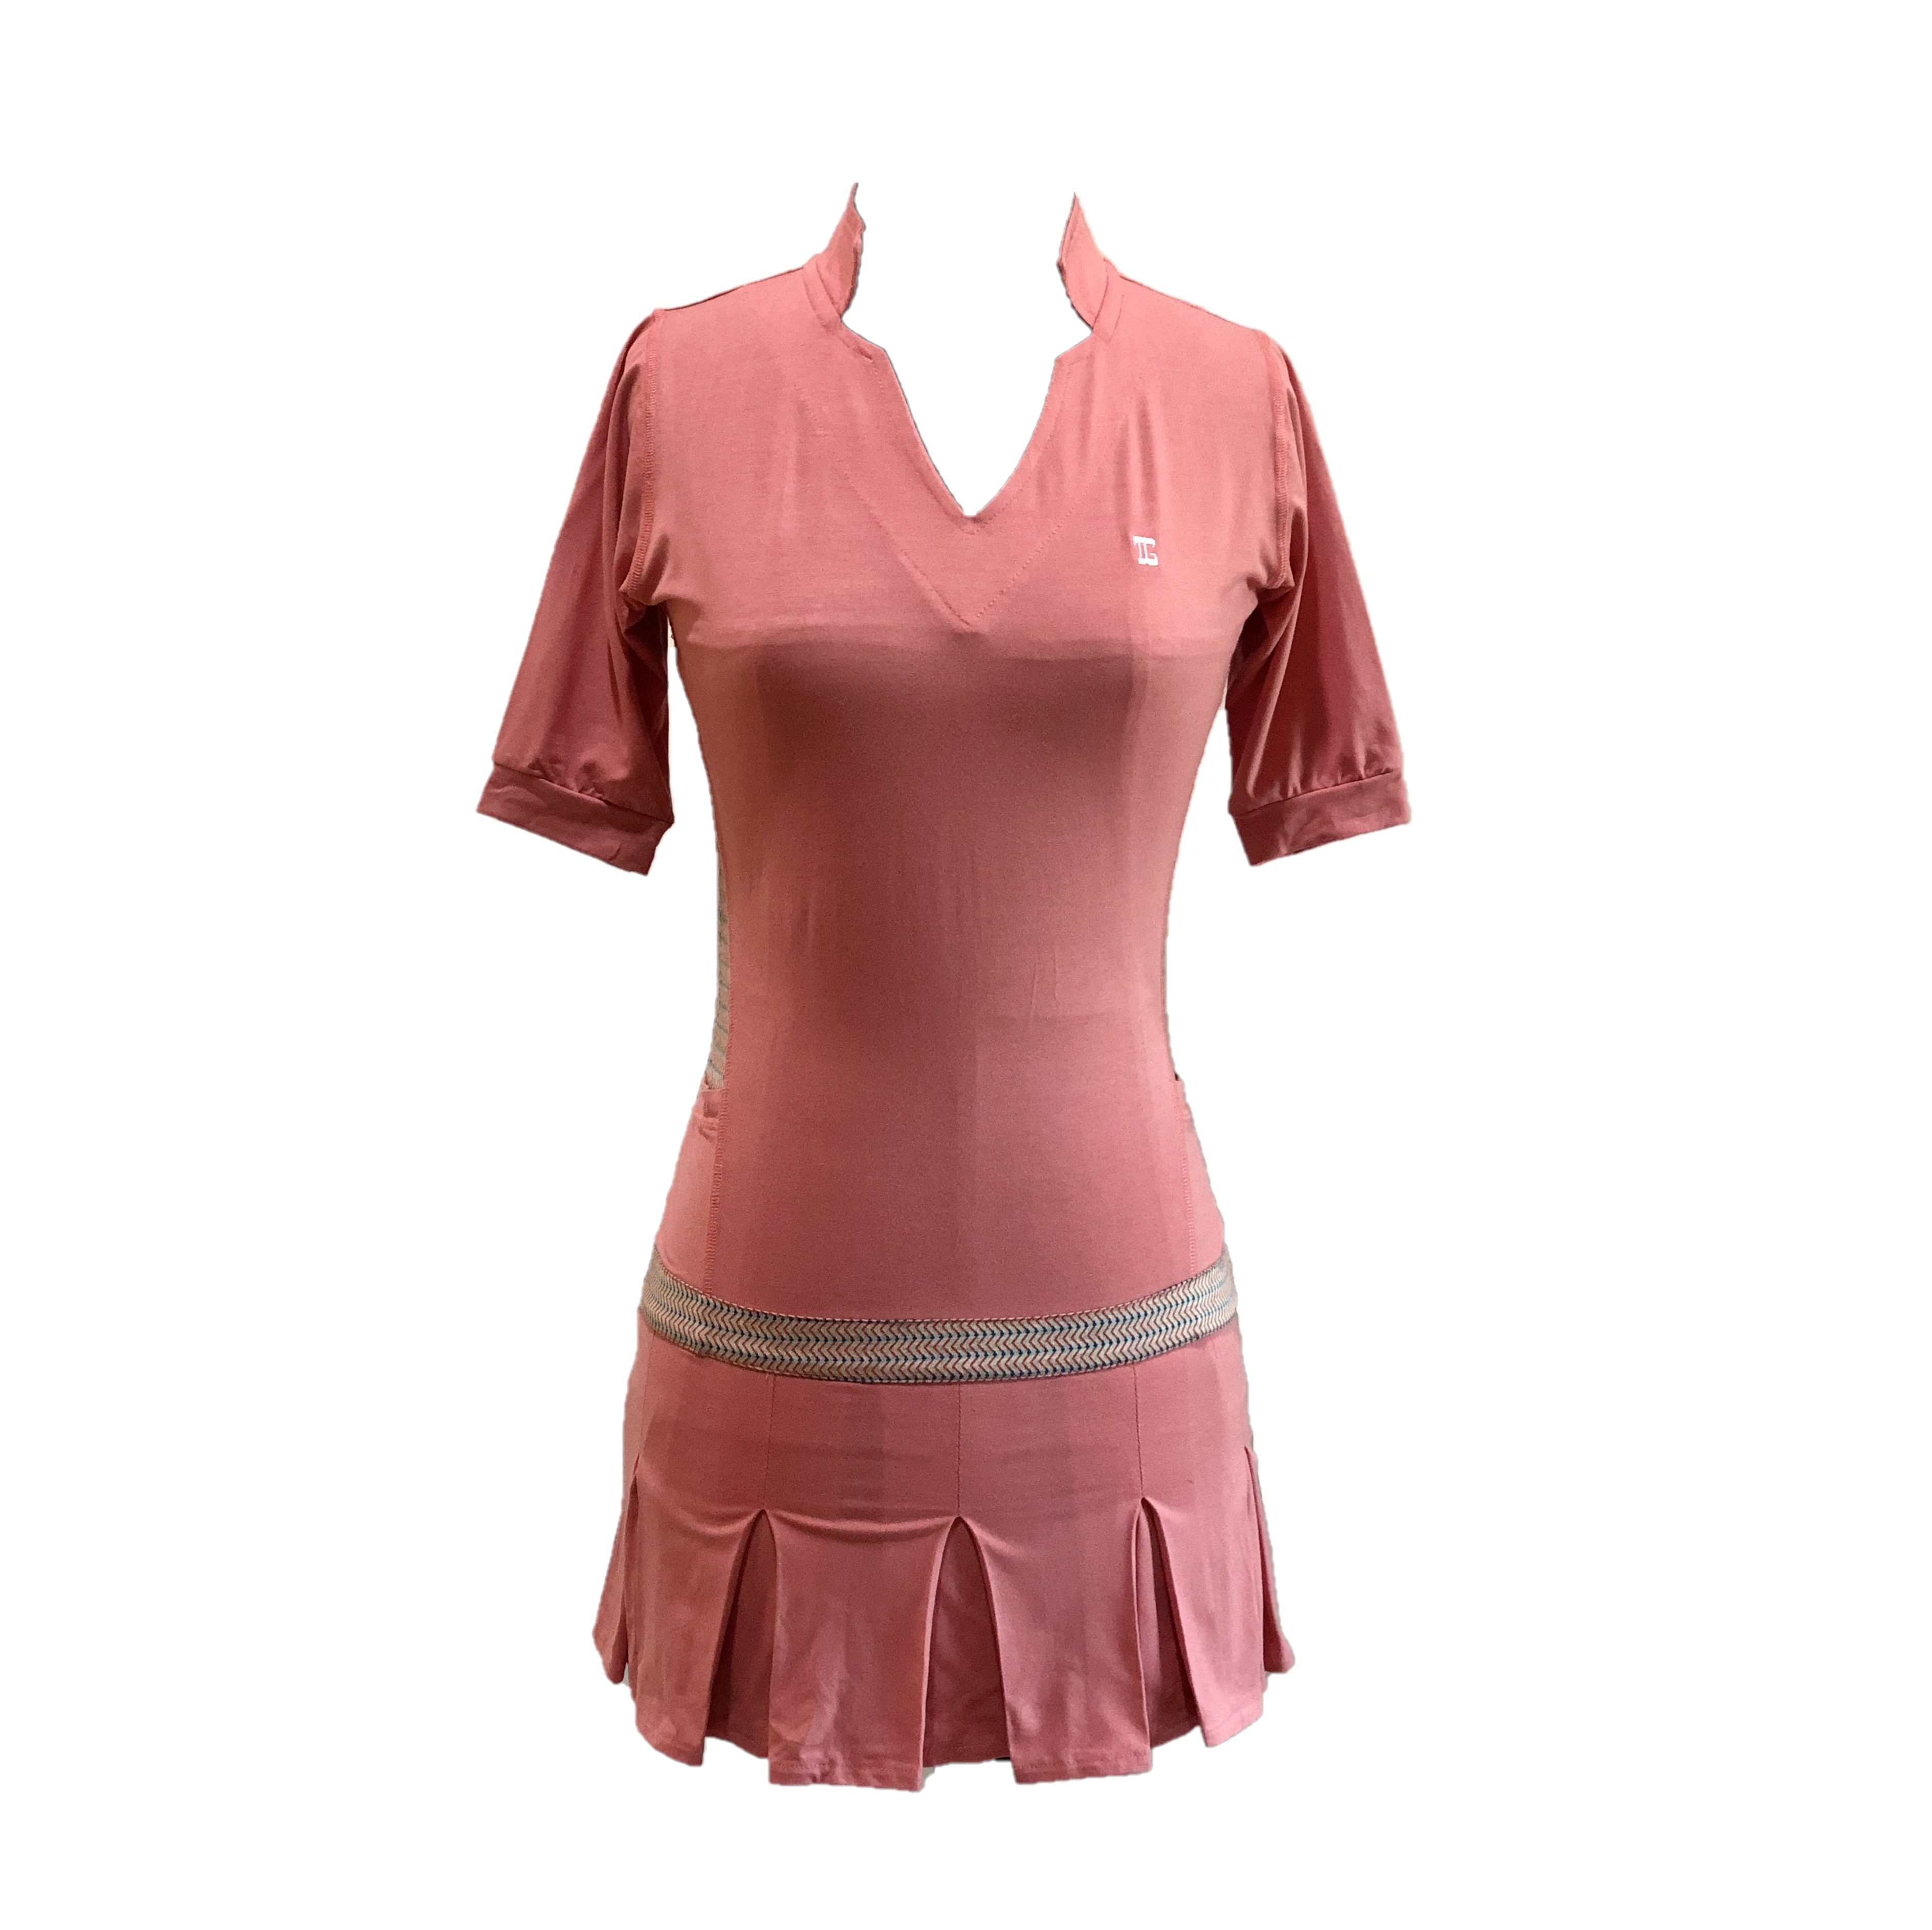 GD-017 || Golf Dress Salmon Pink Open V Neck Mandarin Collar Pleated Swing Hem with Orange Blue and White Fine Herringbone Pattern Underarm and Above Hemline Trim, 2 Side Pockets